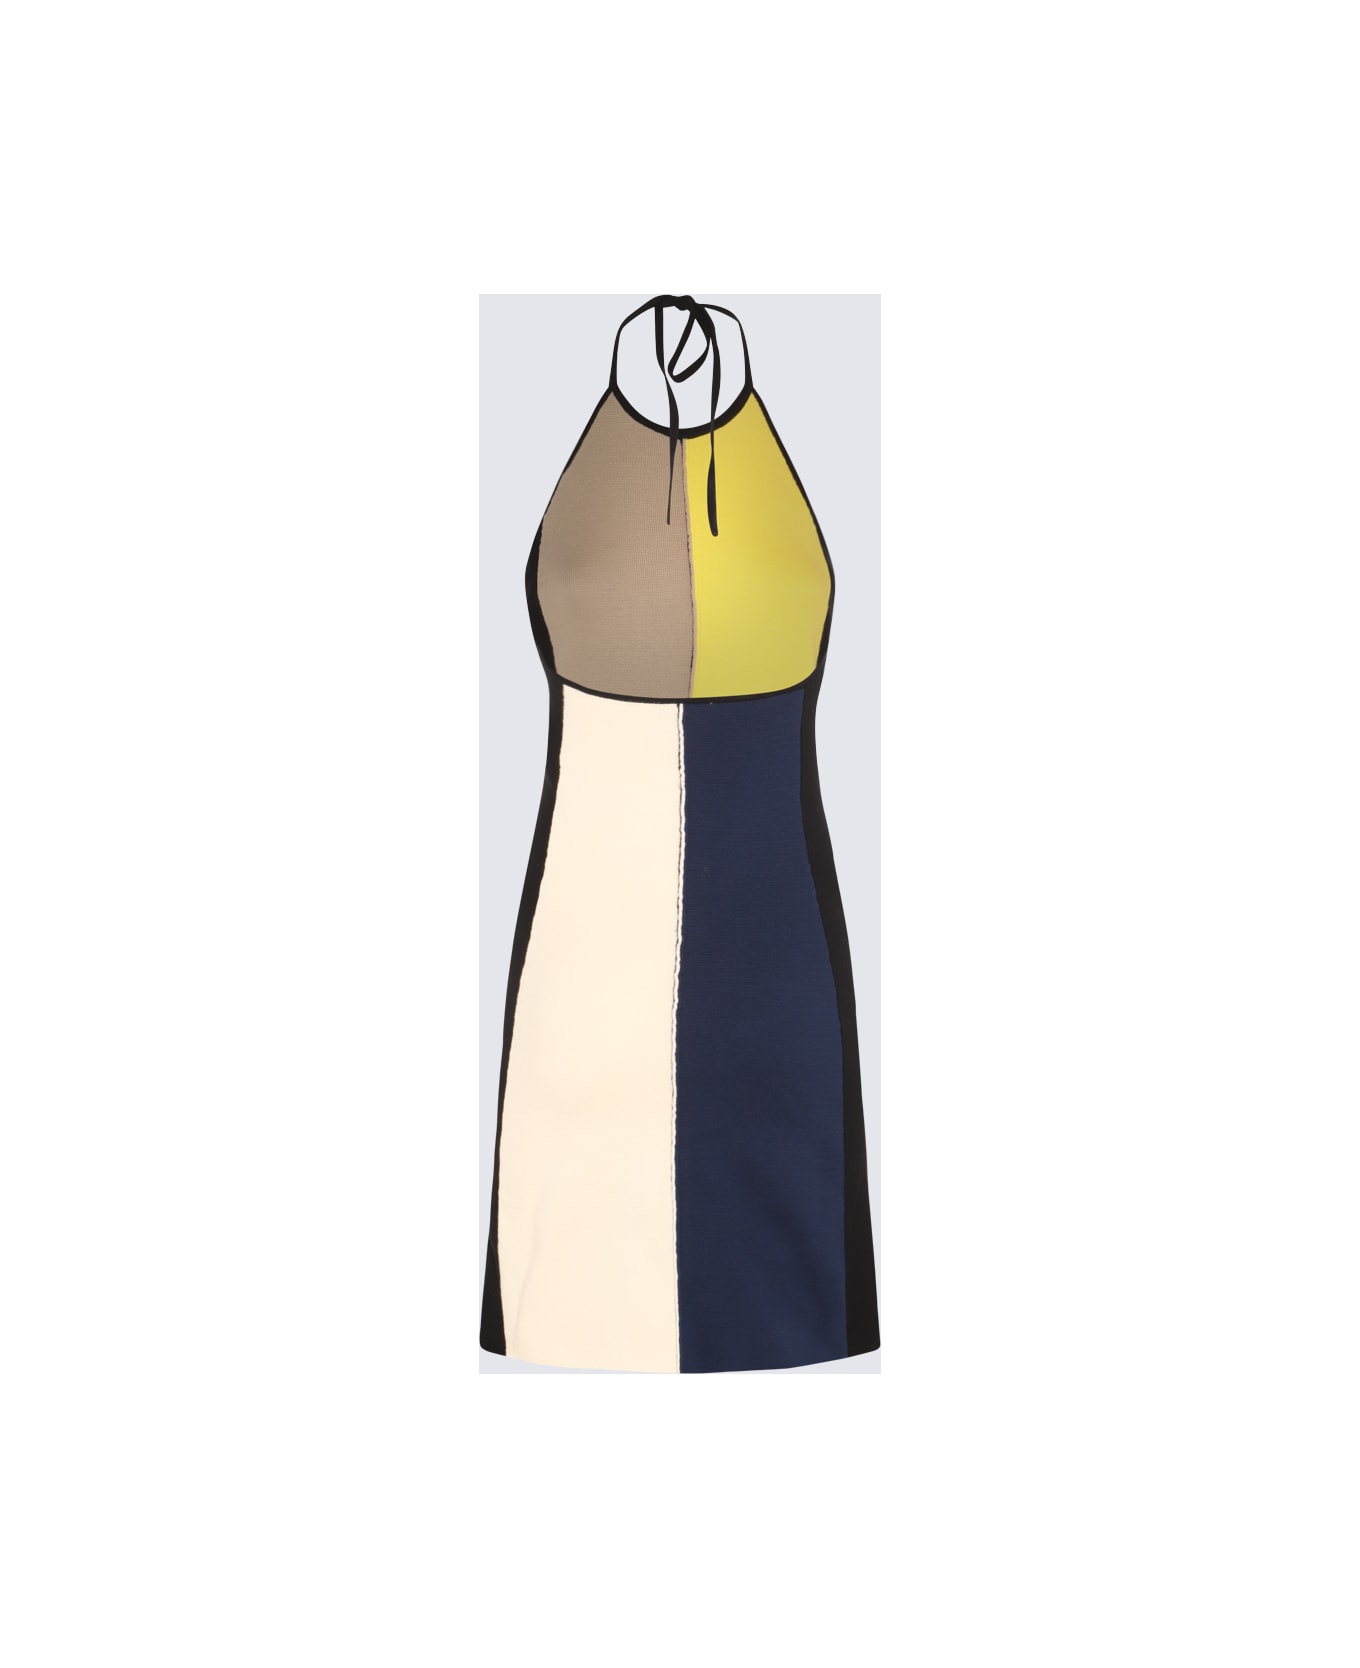 Sunnei Black, Yellow, Beige And White Cotton Dress - MultiColour